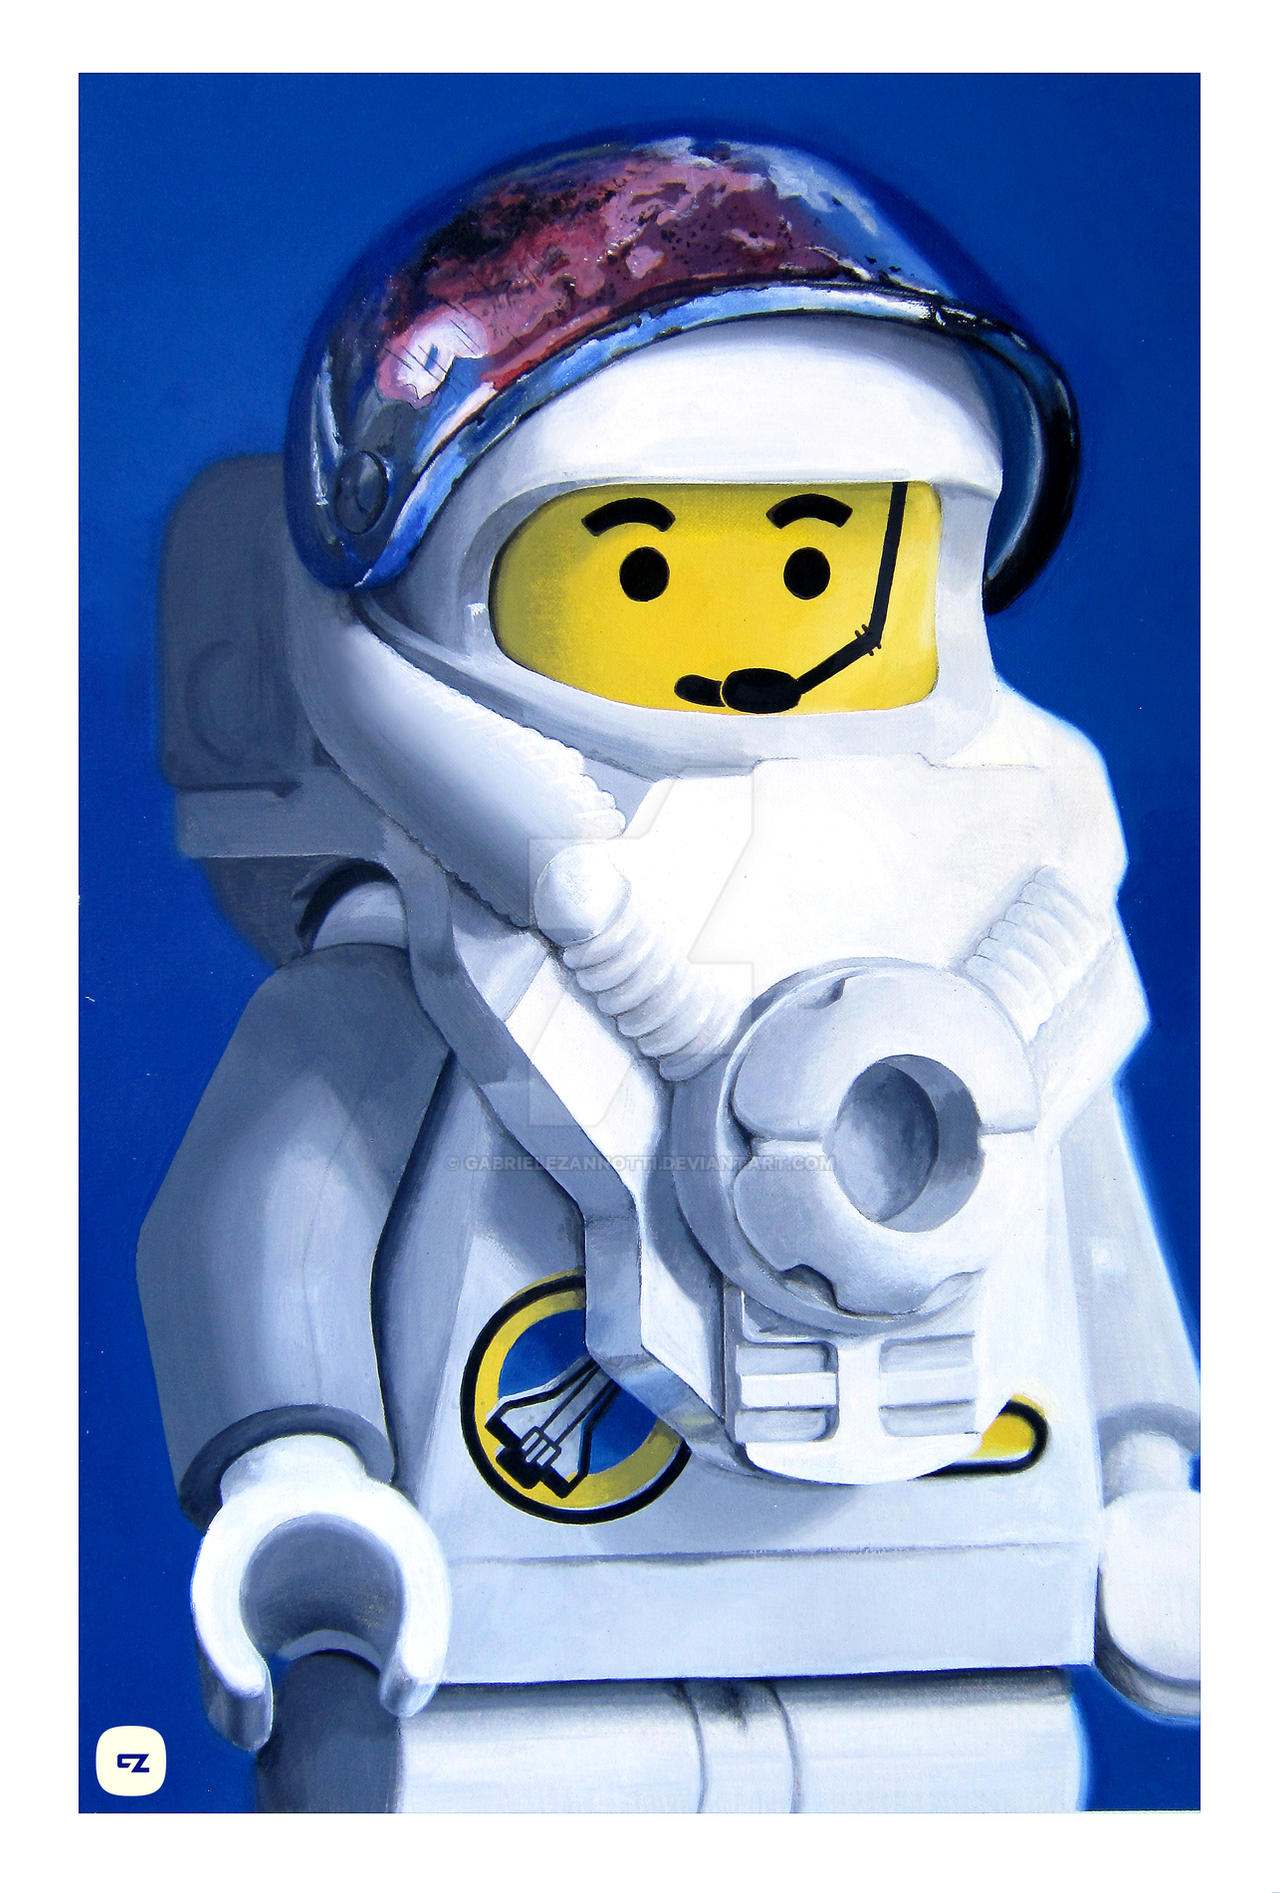 Lego Astronaut - 1999 (2014) by gabrielezannotti on DeviantArt